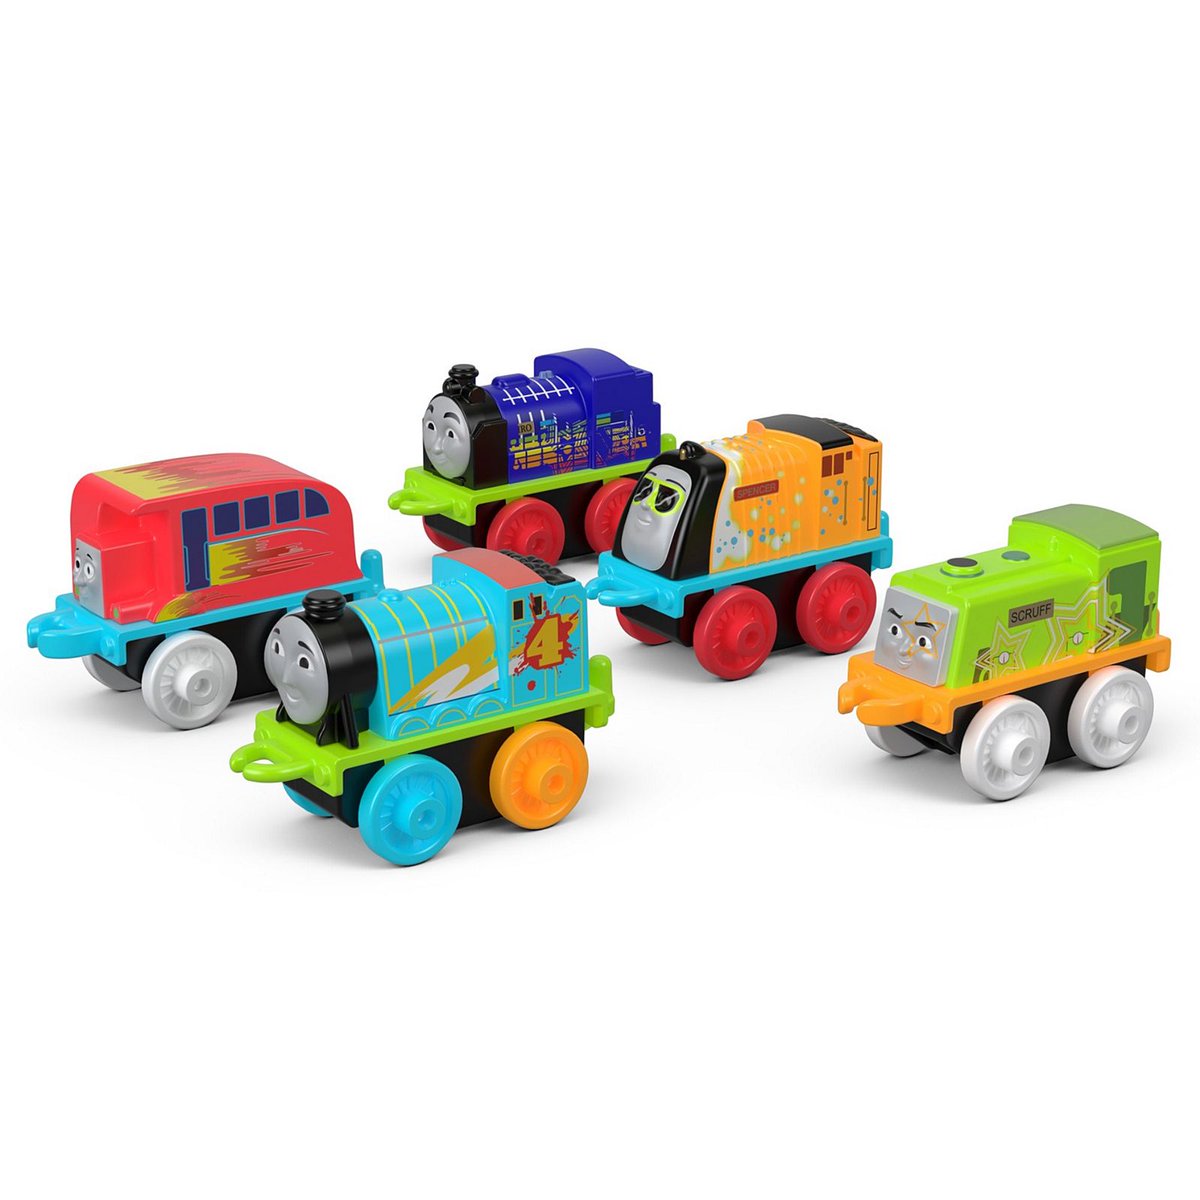 Thomas & Friends รถไฟโทมัส มินิ เรืองแสง คละแบบ 5 คัน Glow in the Dark train 5 piece pack  FVJ69 ของเล่น